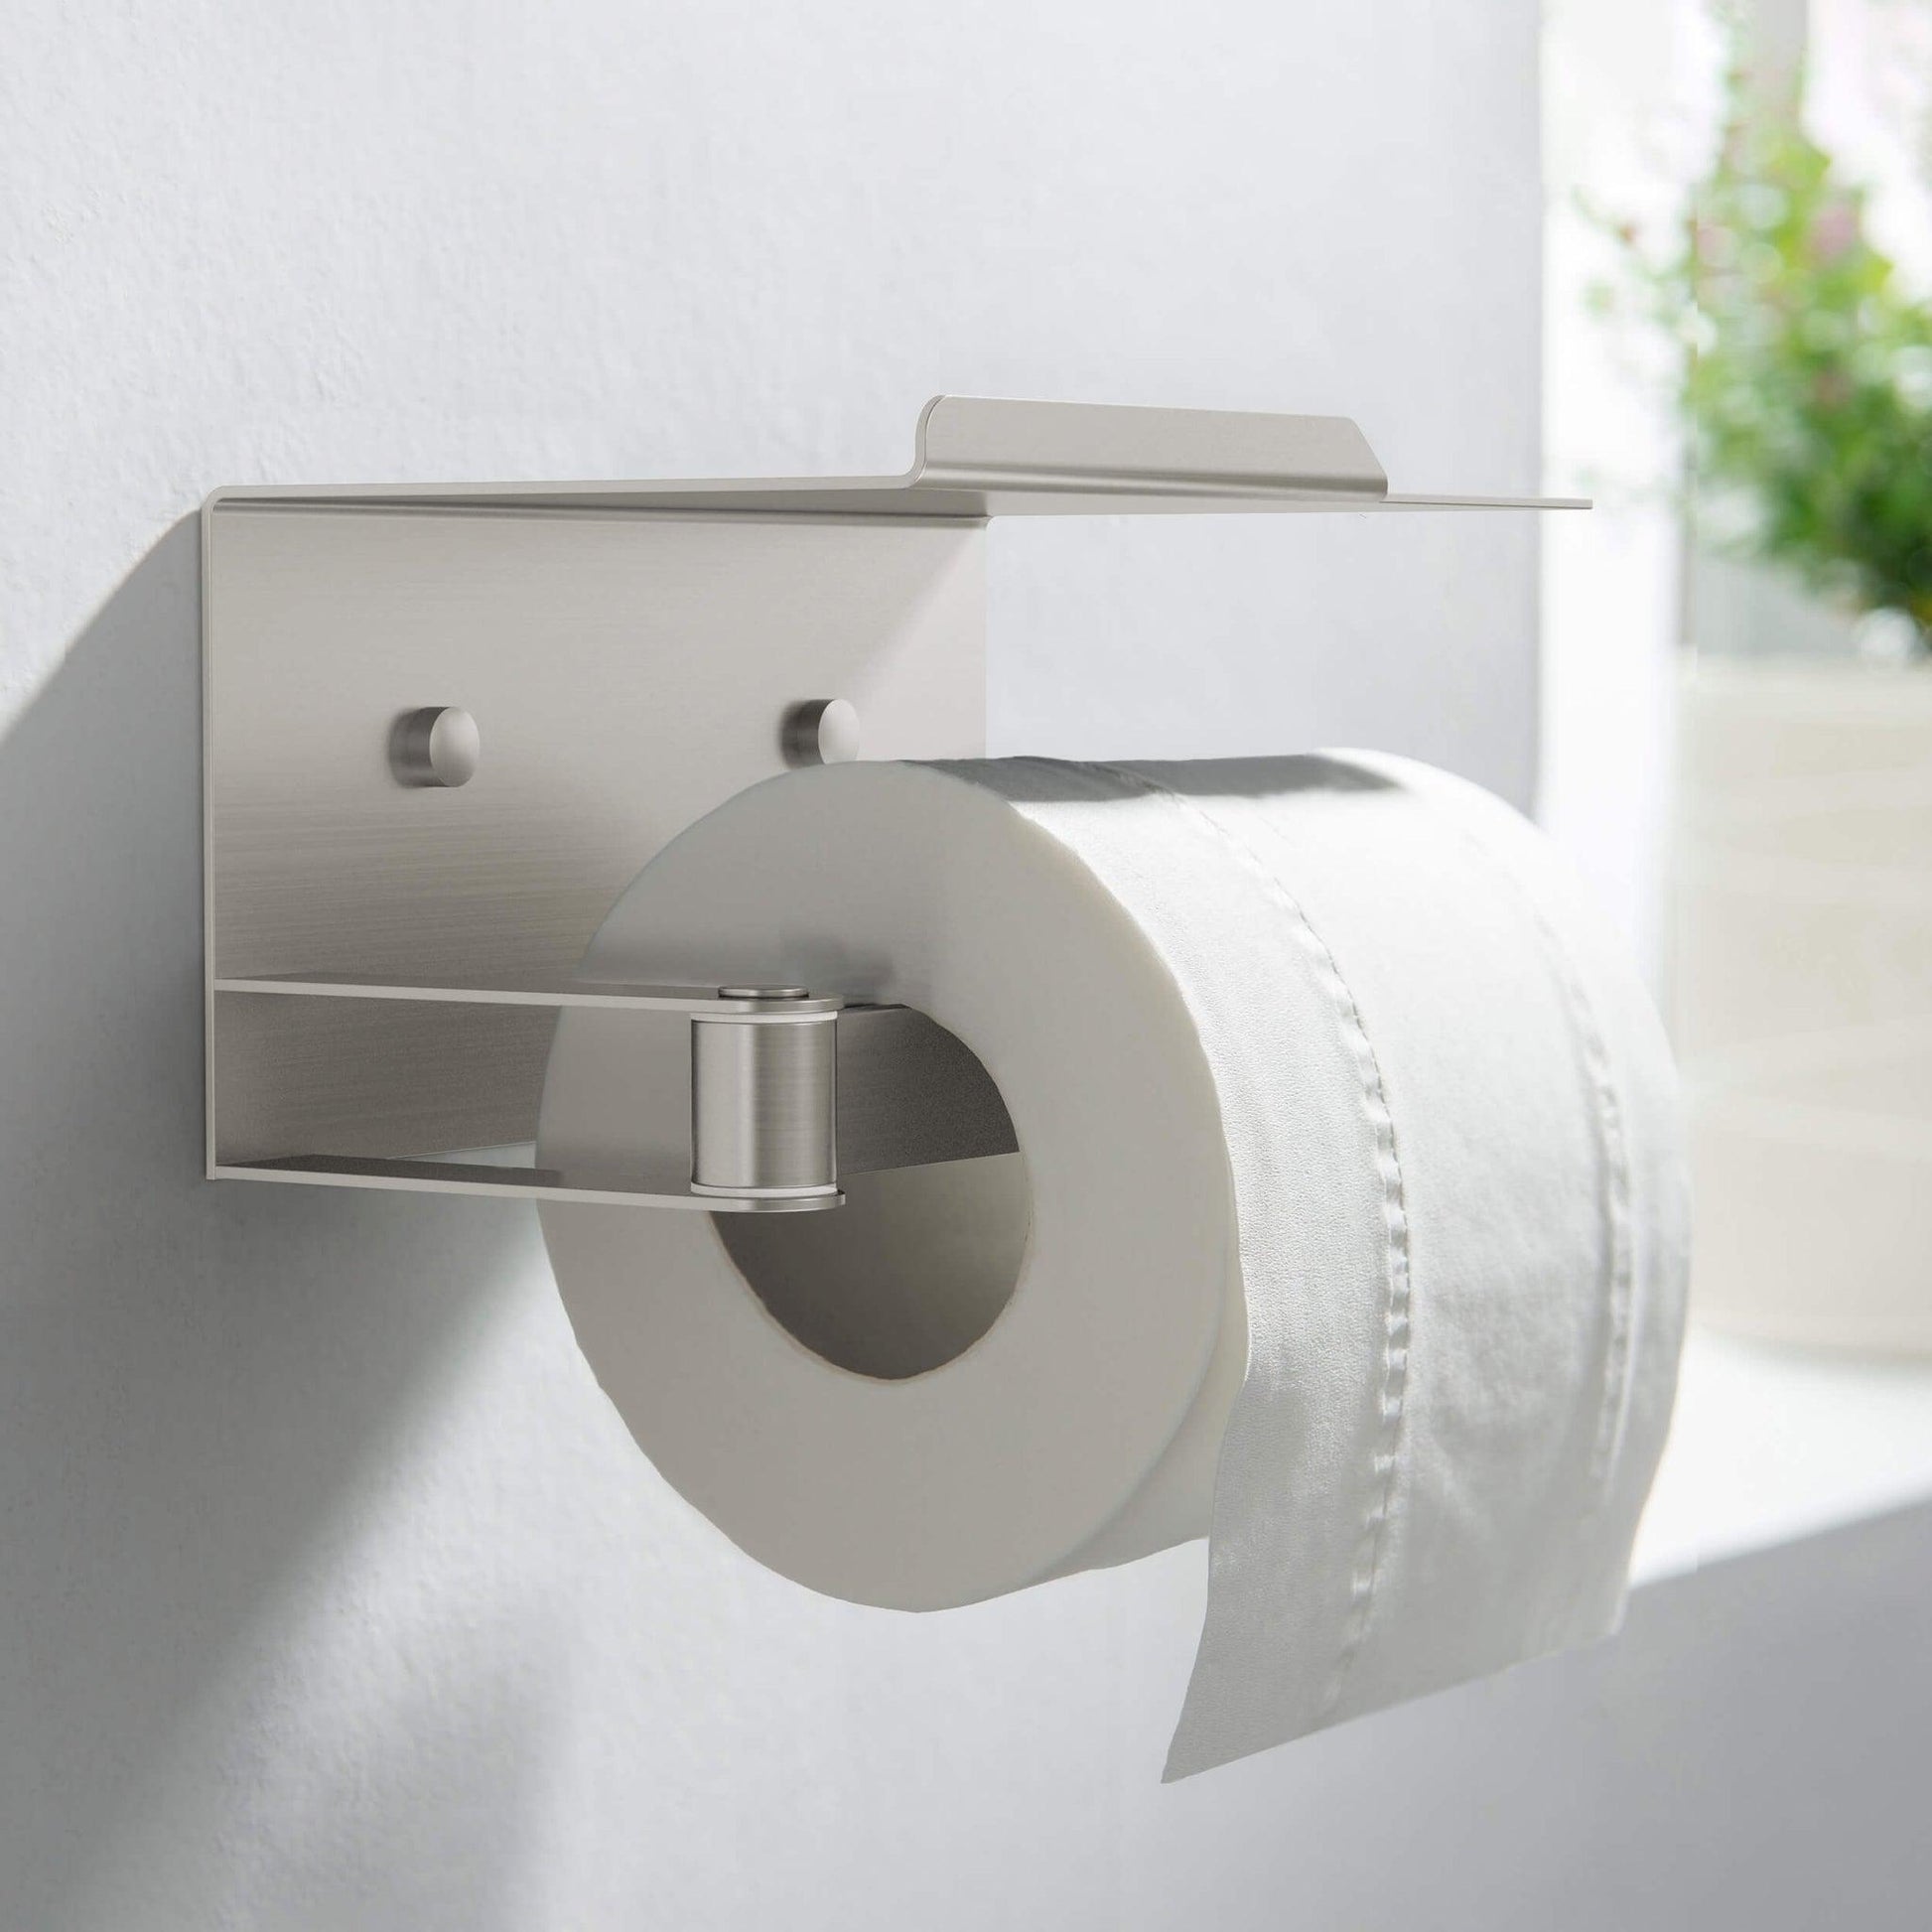 KIBI Deco Bathroom Toilet Paper Holder With Platform in Brushed Nickel Finish